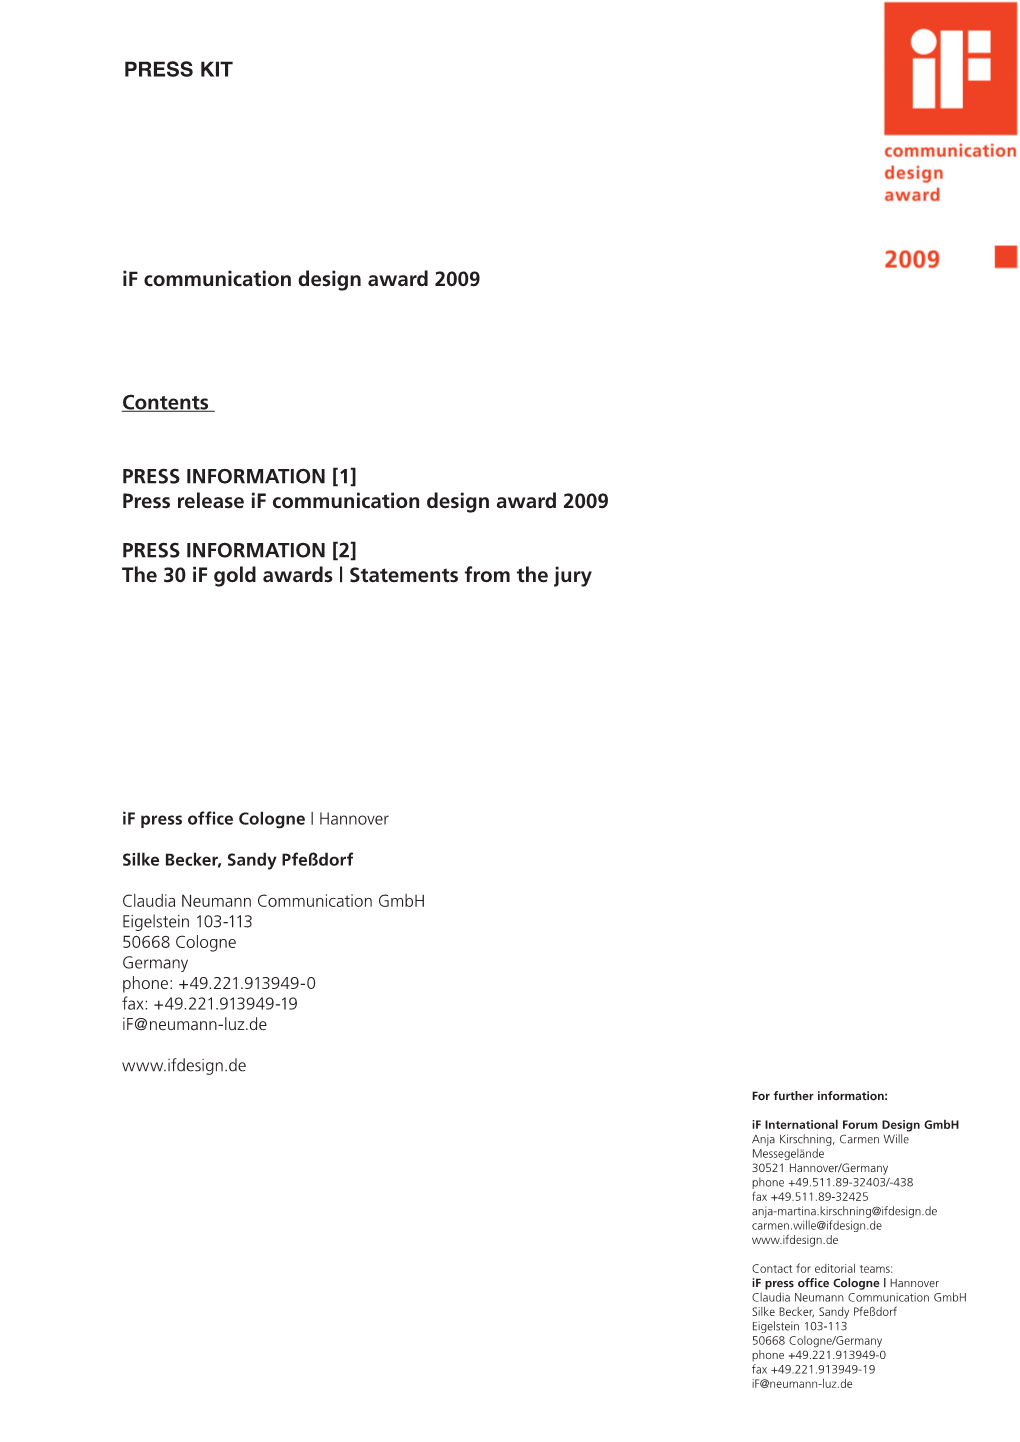 Press Release If Communication Design Award 2009